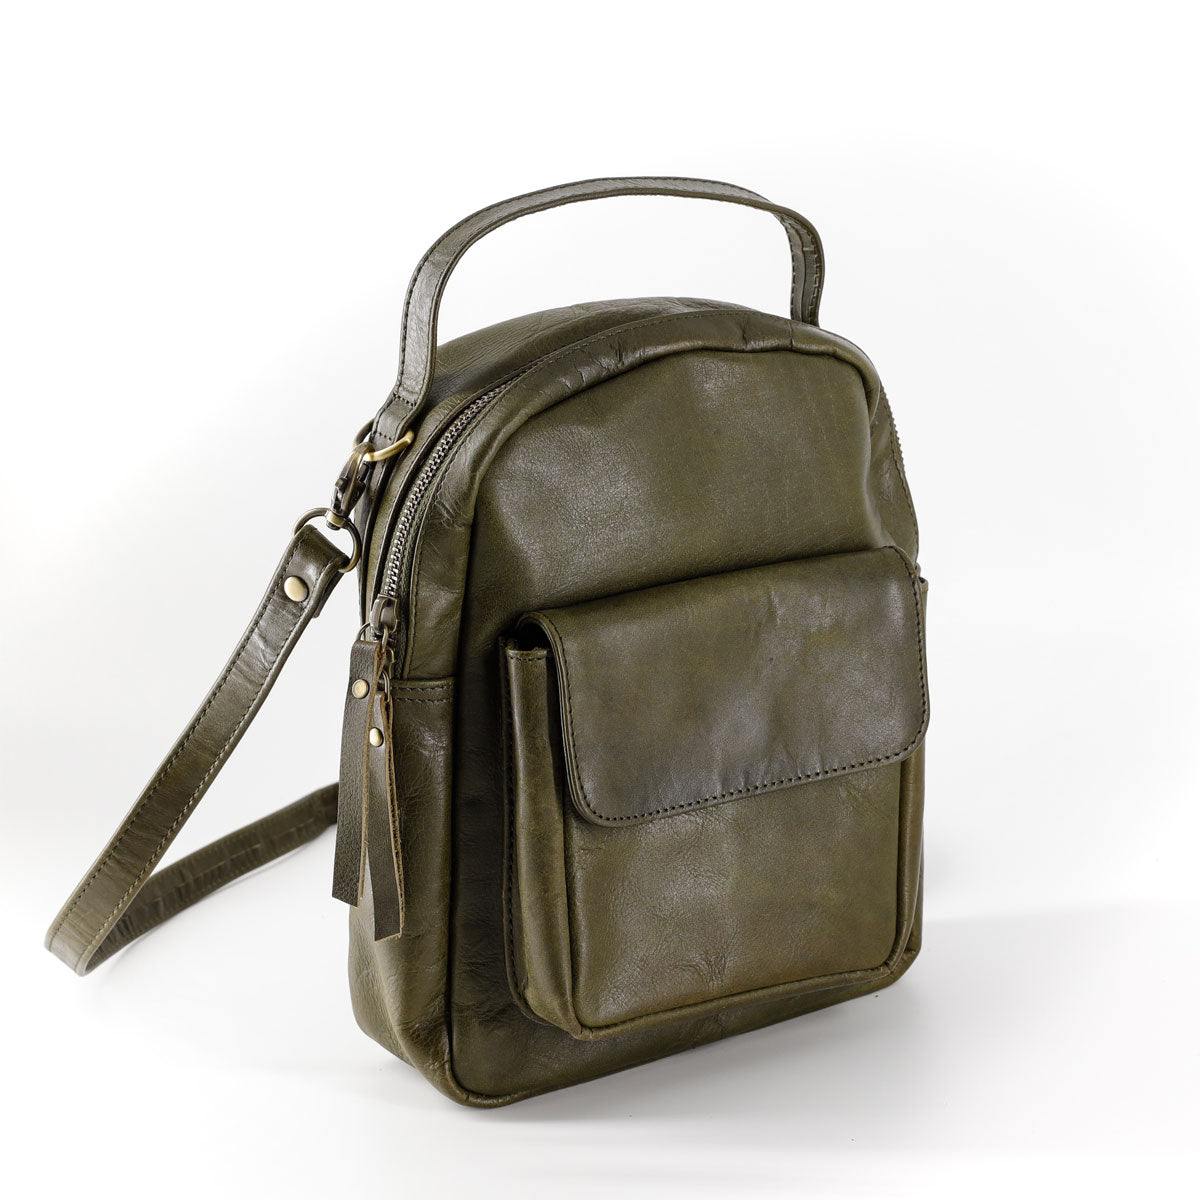 Handbags & Backpacks-Cross Body Bags,Leather